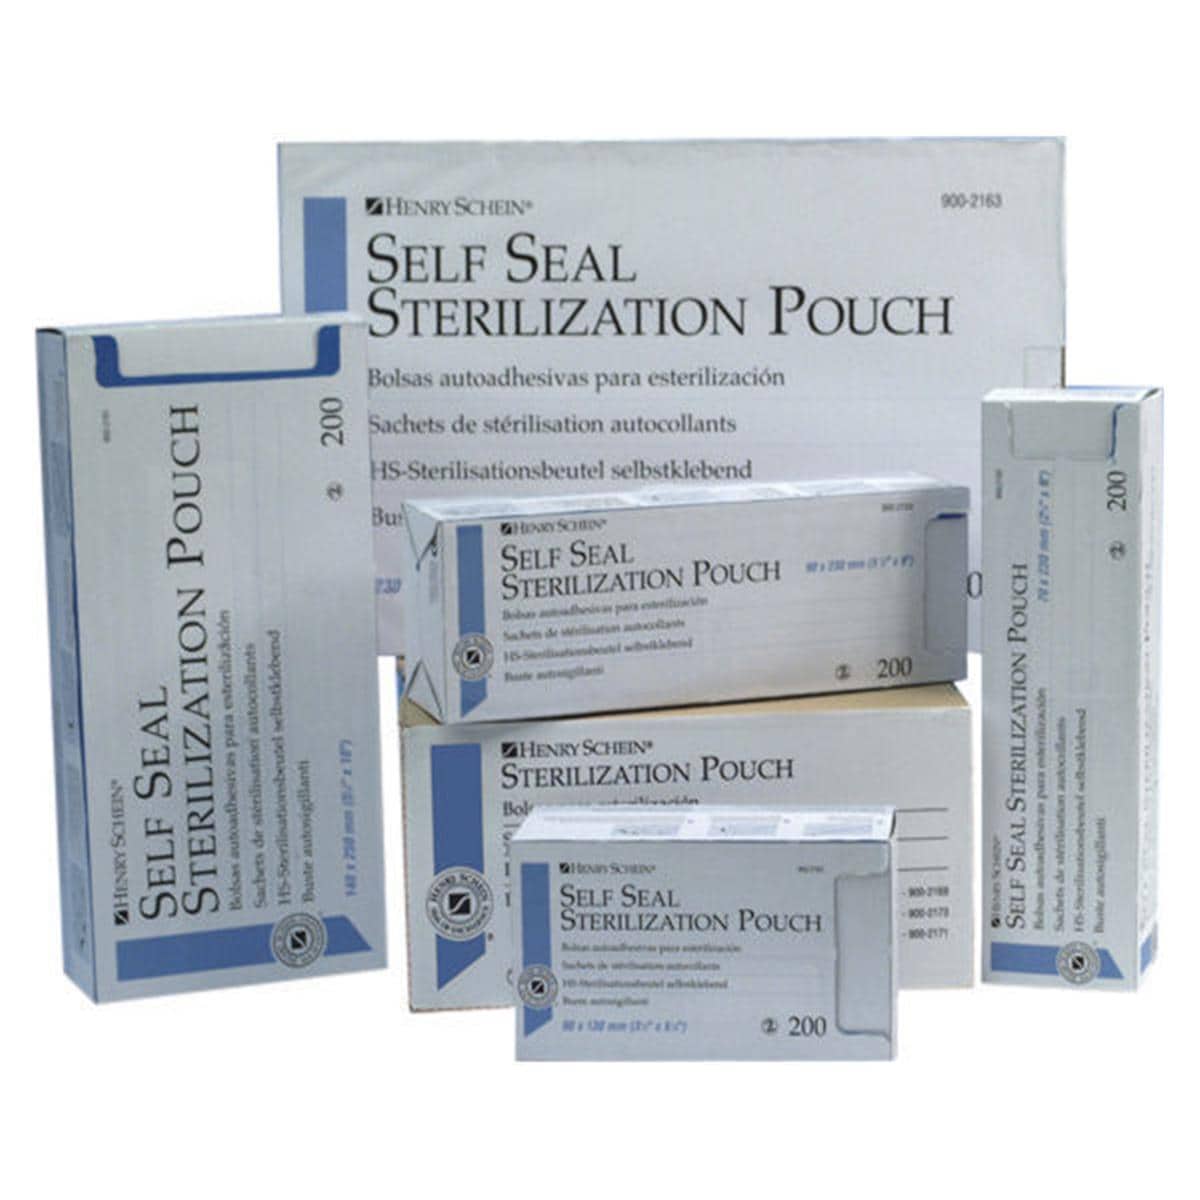 HS-Sterilisationsbeutel selbstklebend, Self seal Sterilisation Pouch - Größe 190 x 356 mm, Packung 200 Stück